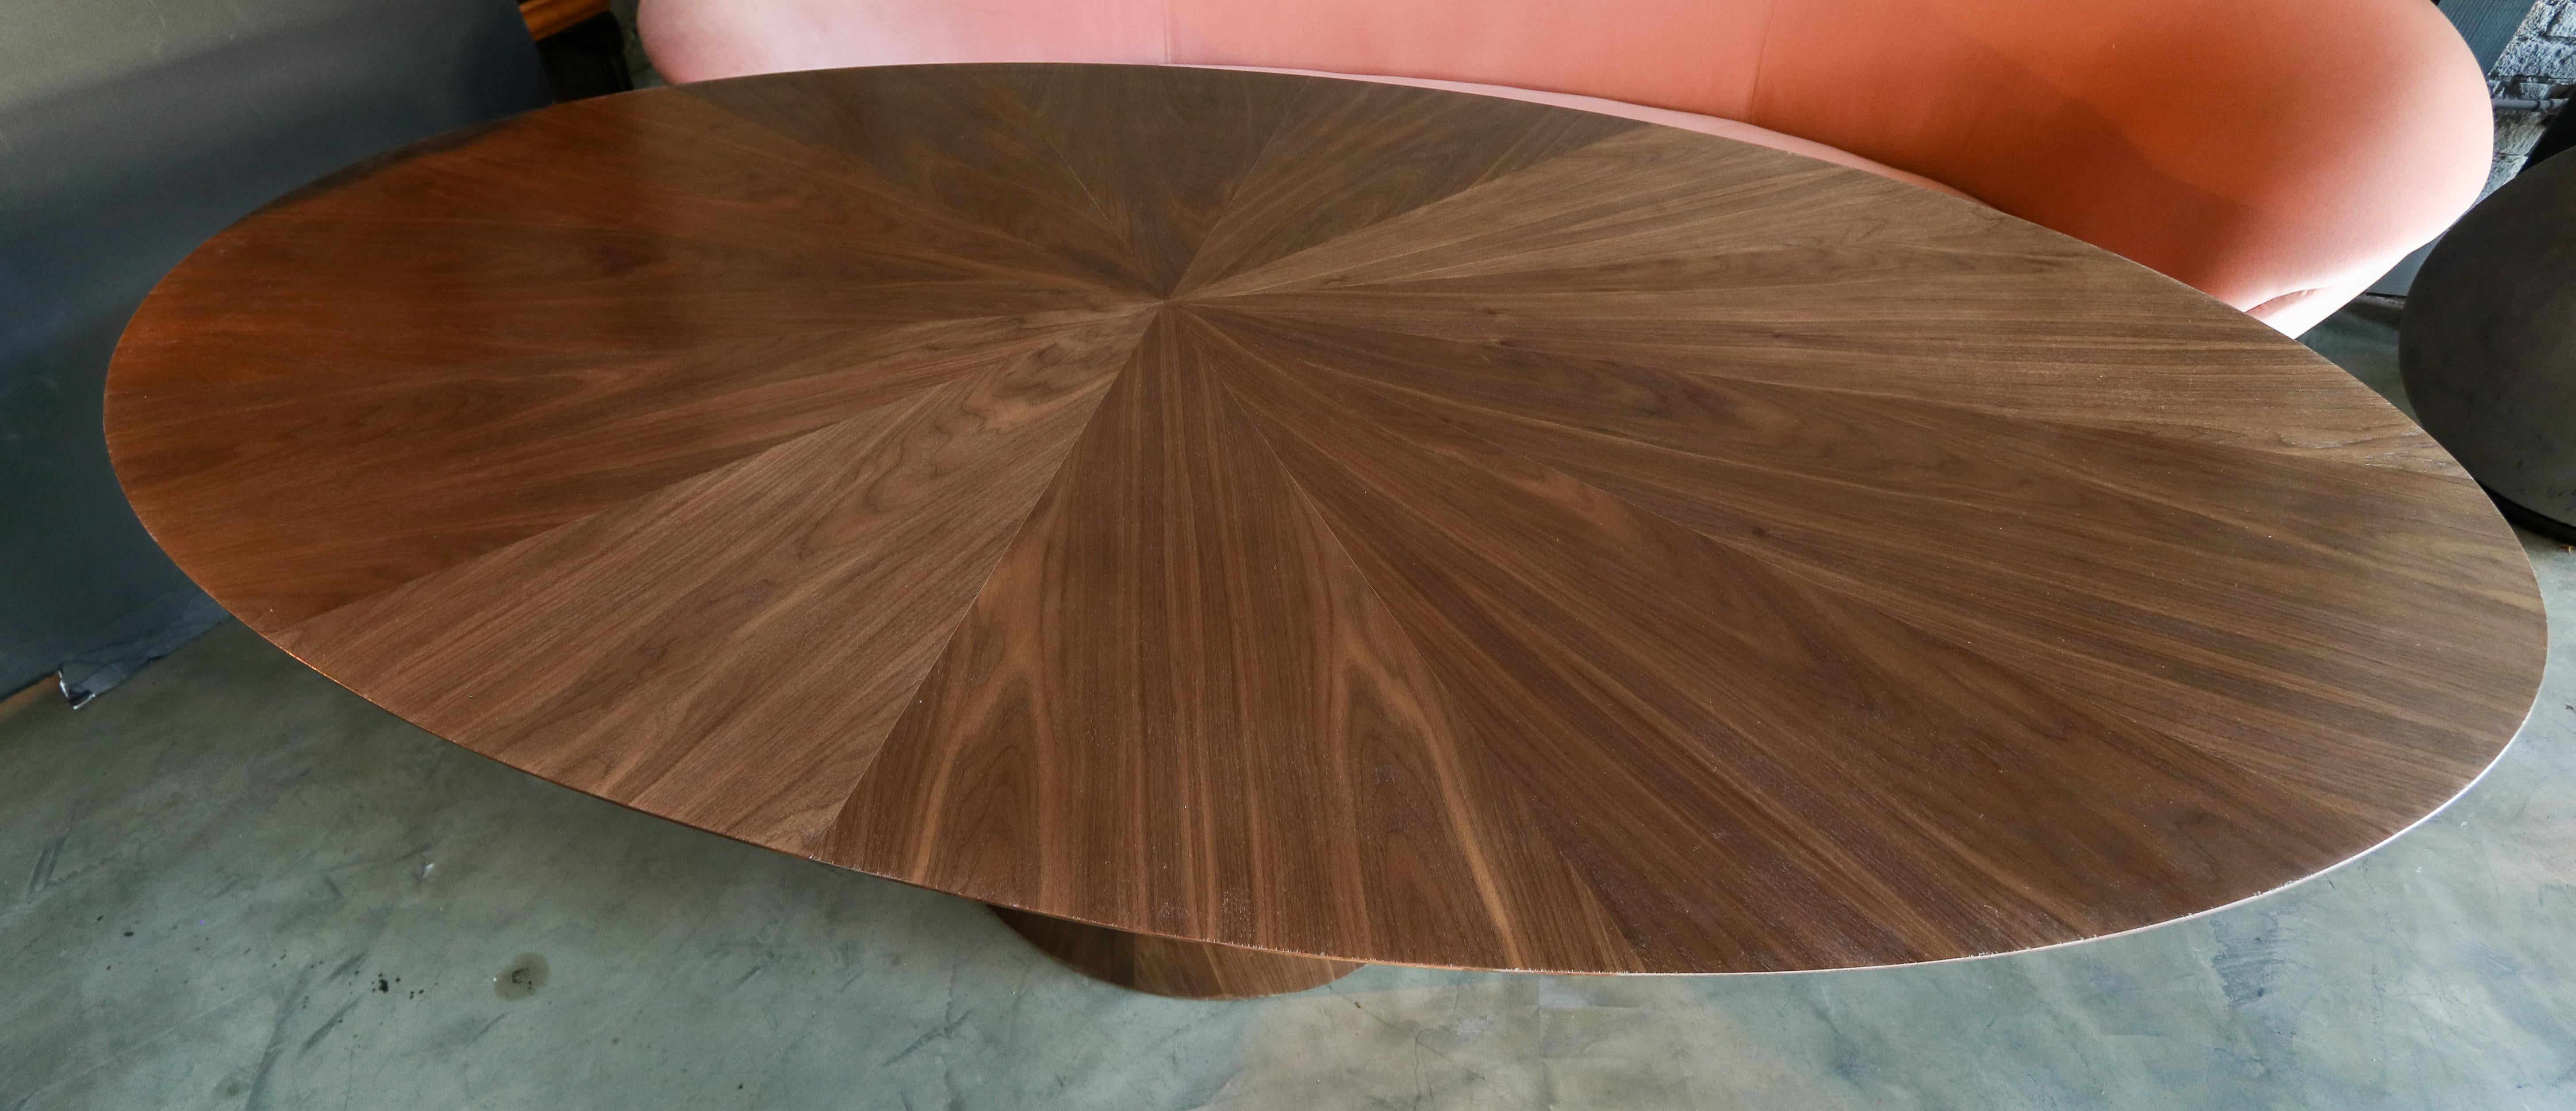 walnut oval pedestal dining table